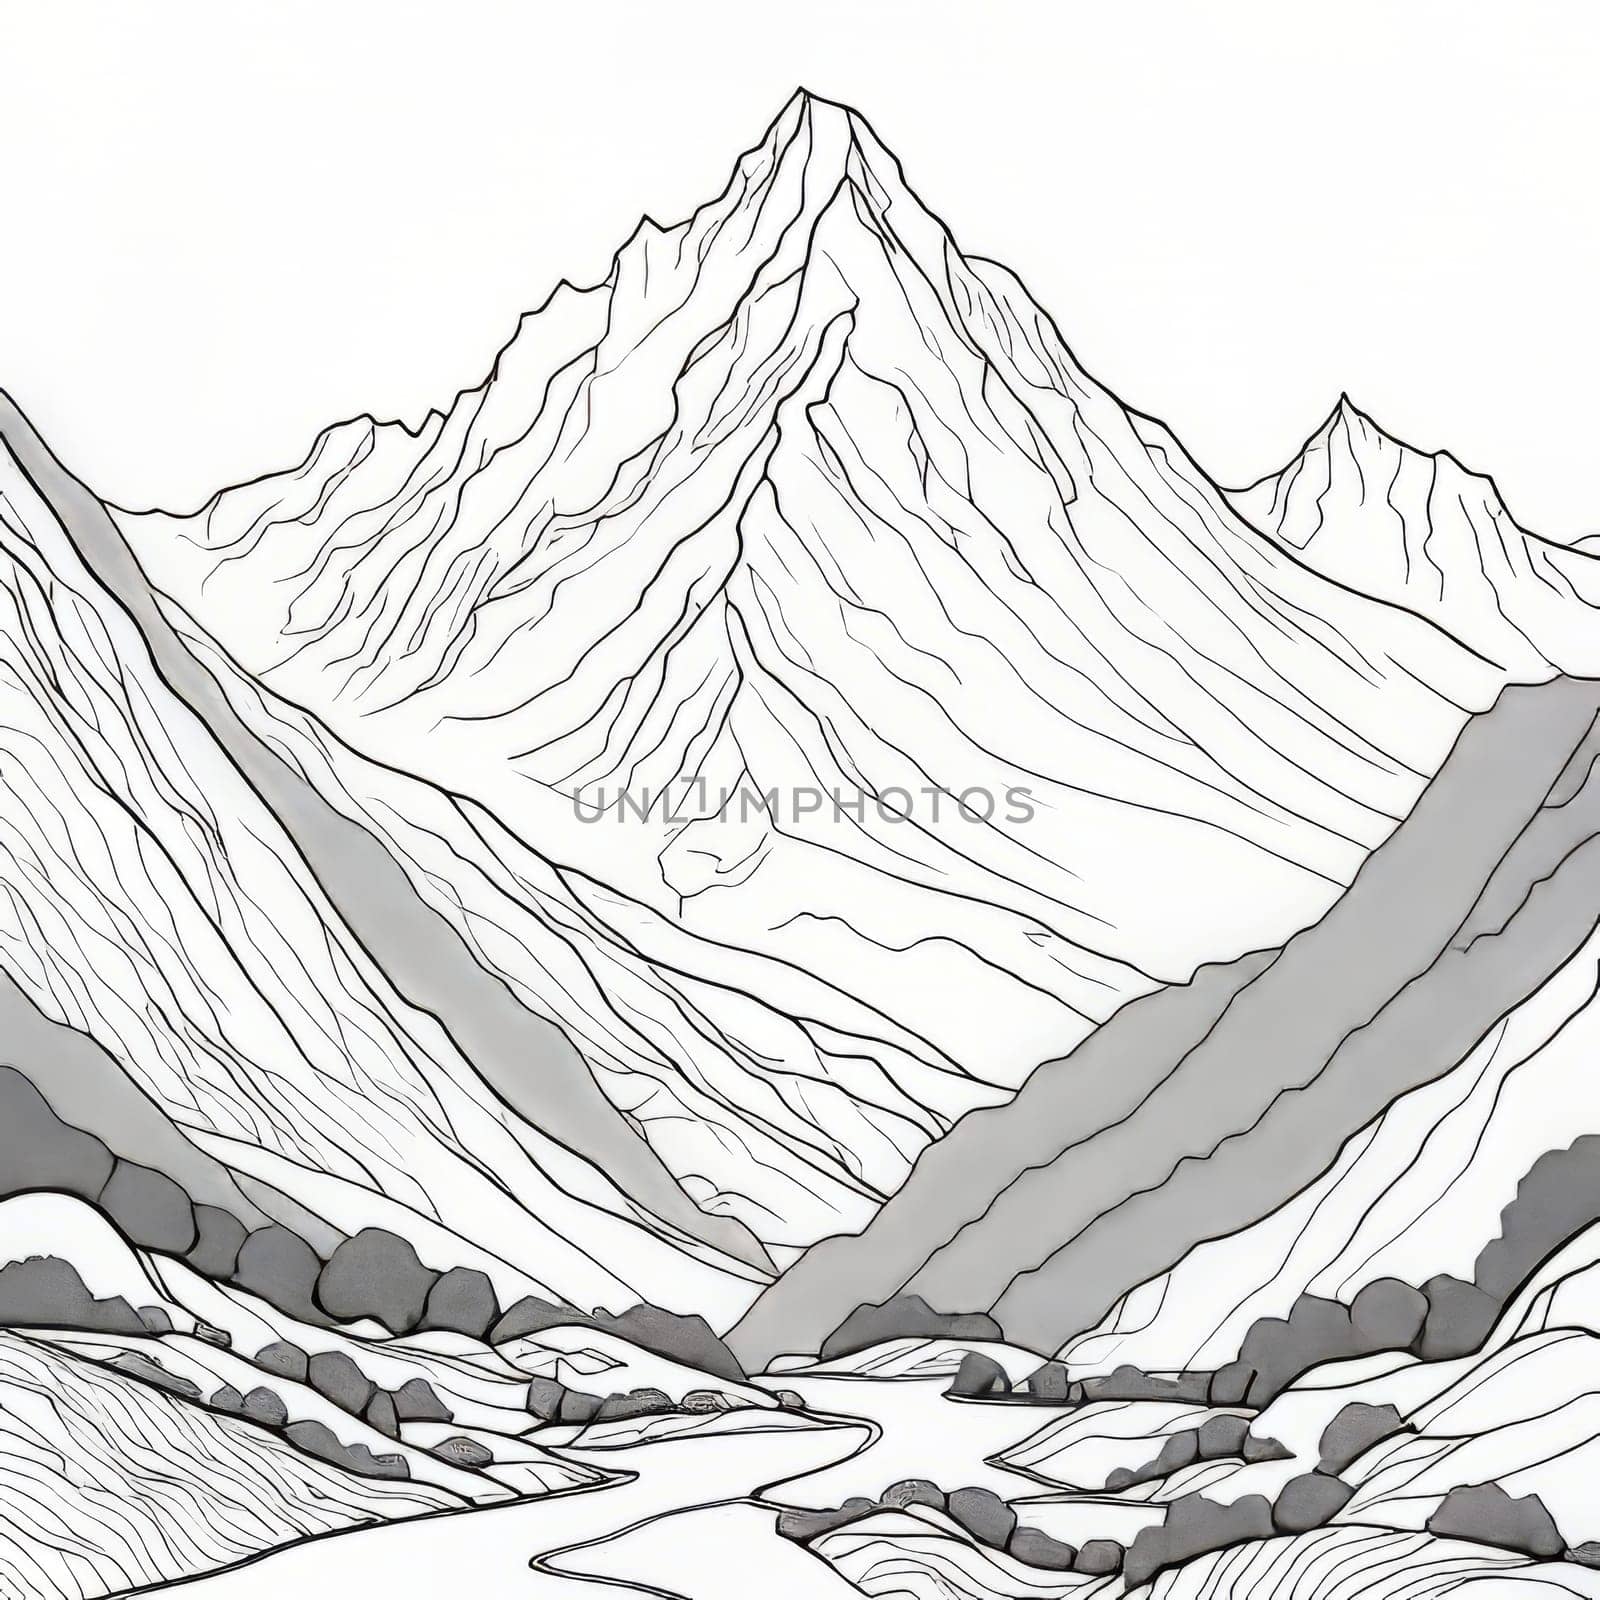 Serene black, white painting capturing majestic Nepal mountains, lush trees in harmonious contrast. Printed on merchandise like tshirts, mug, notebooks for nature lovers, travel brochures, print, logo